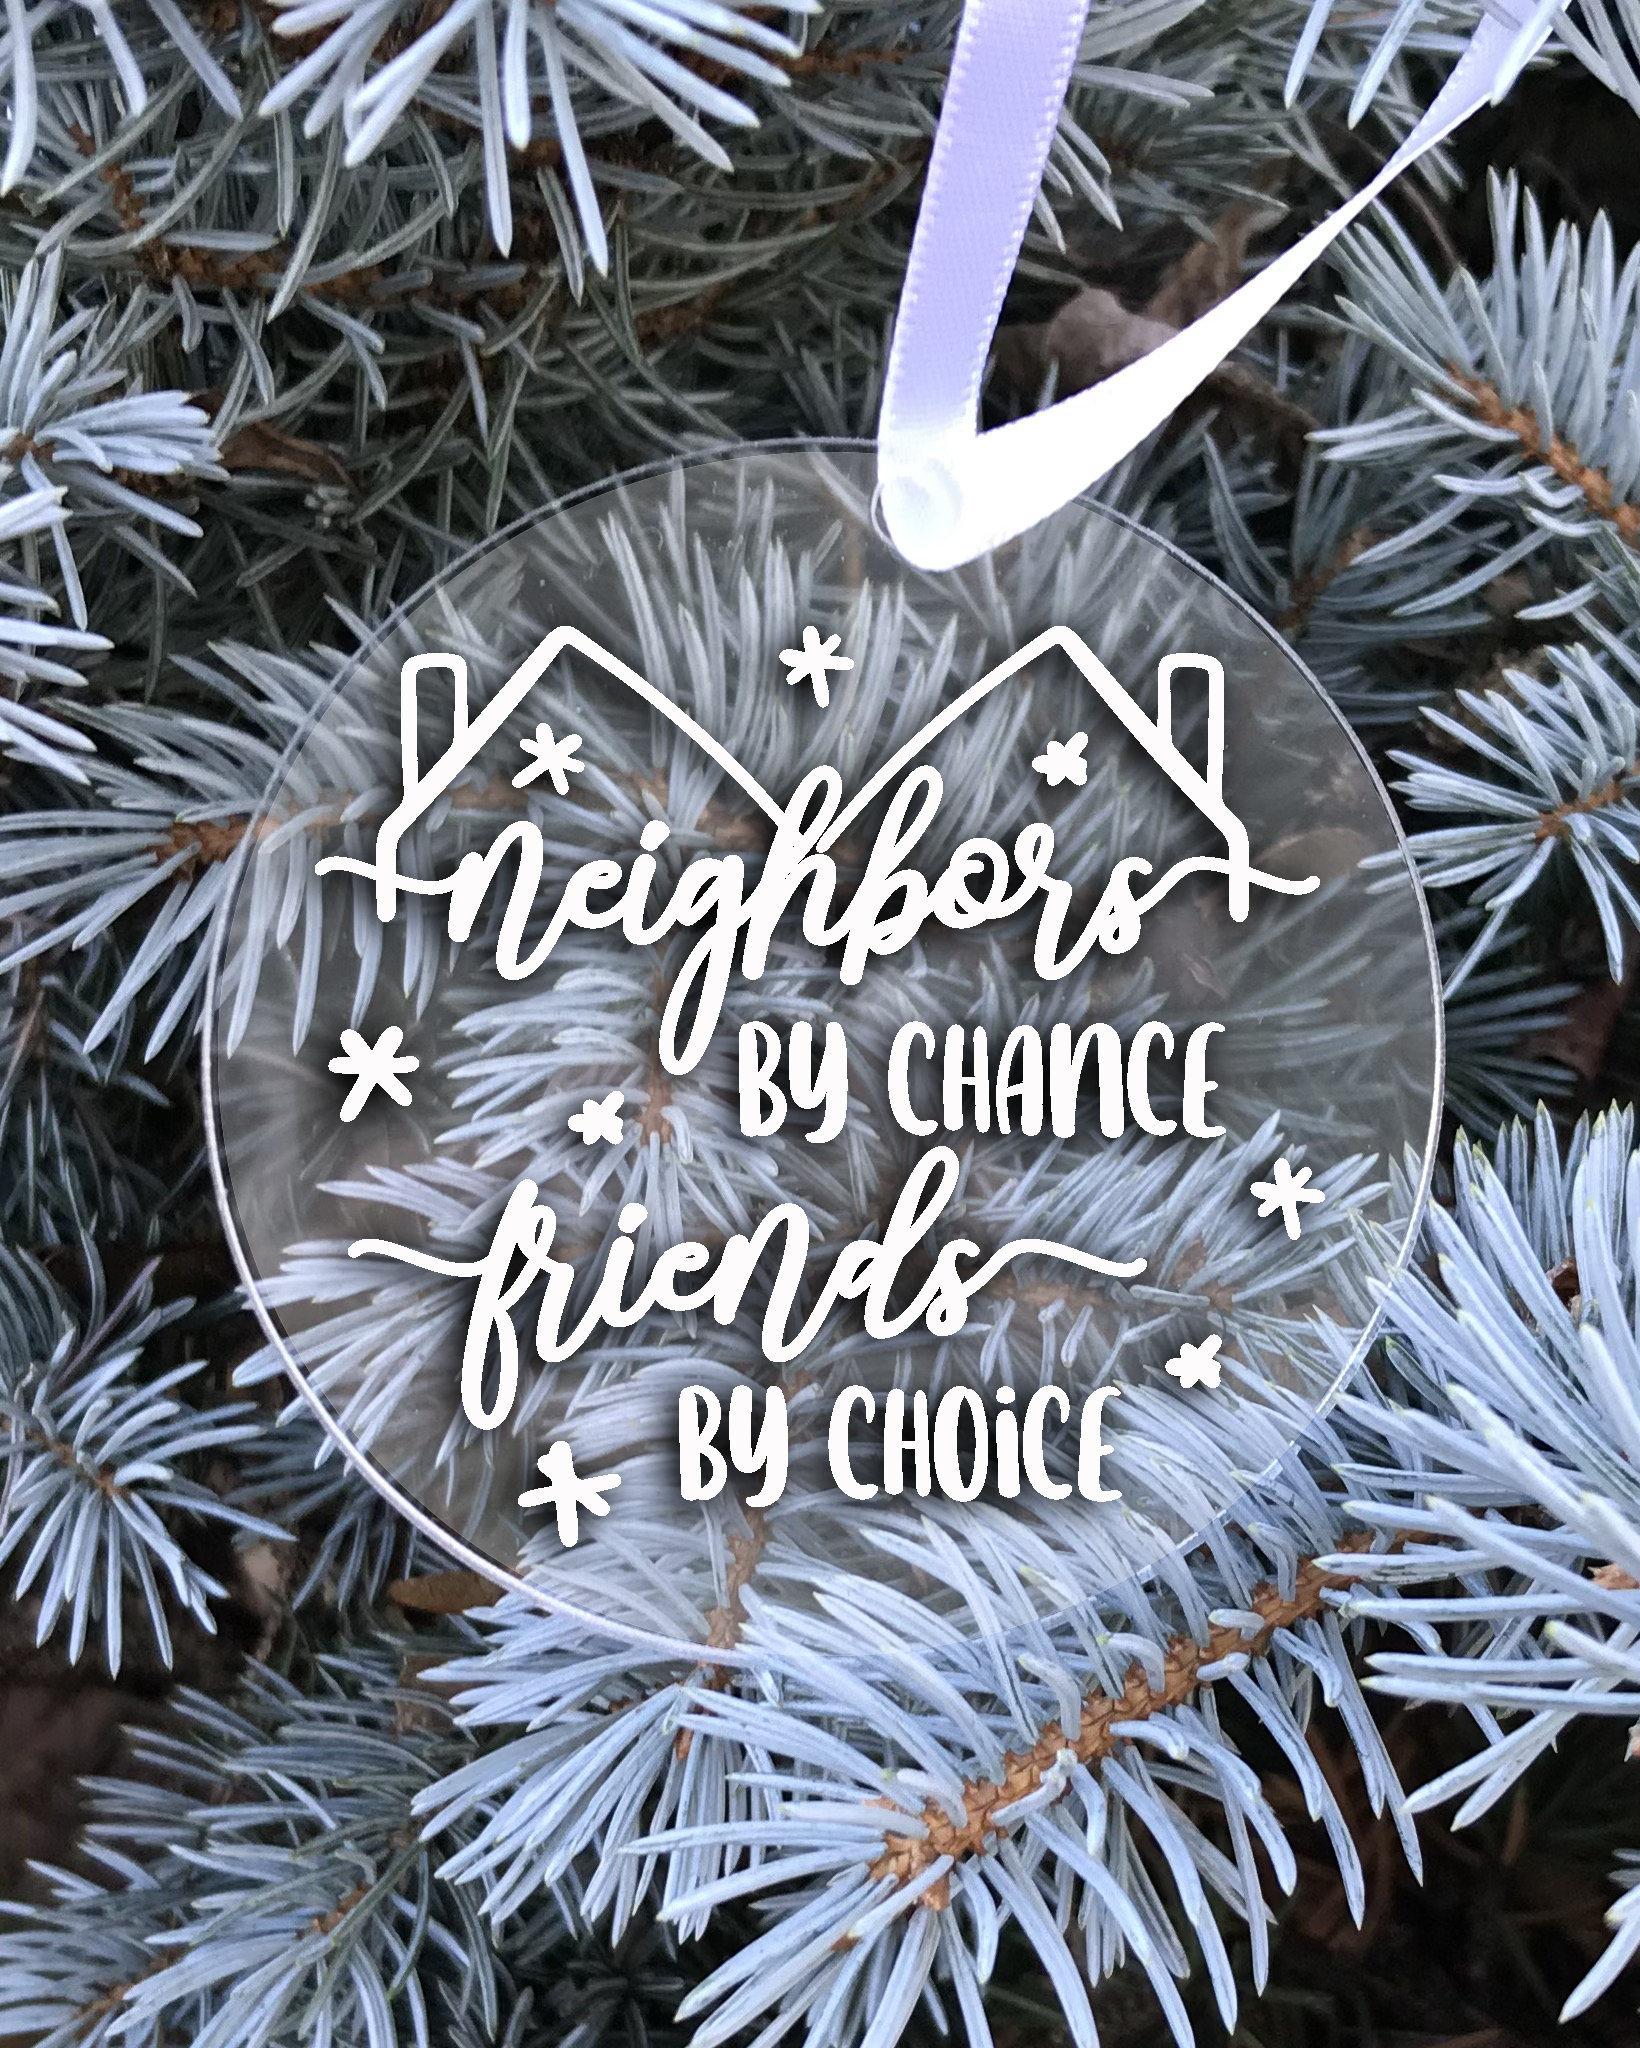 Neighbor Christmas Ornament SVG, Friends Graphic by Premium Digital Files ·  Creative Fabrica